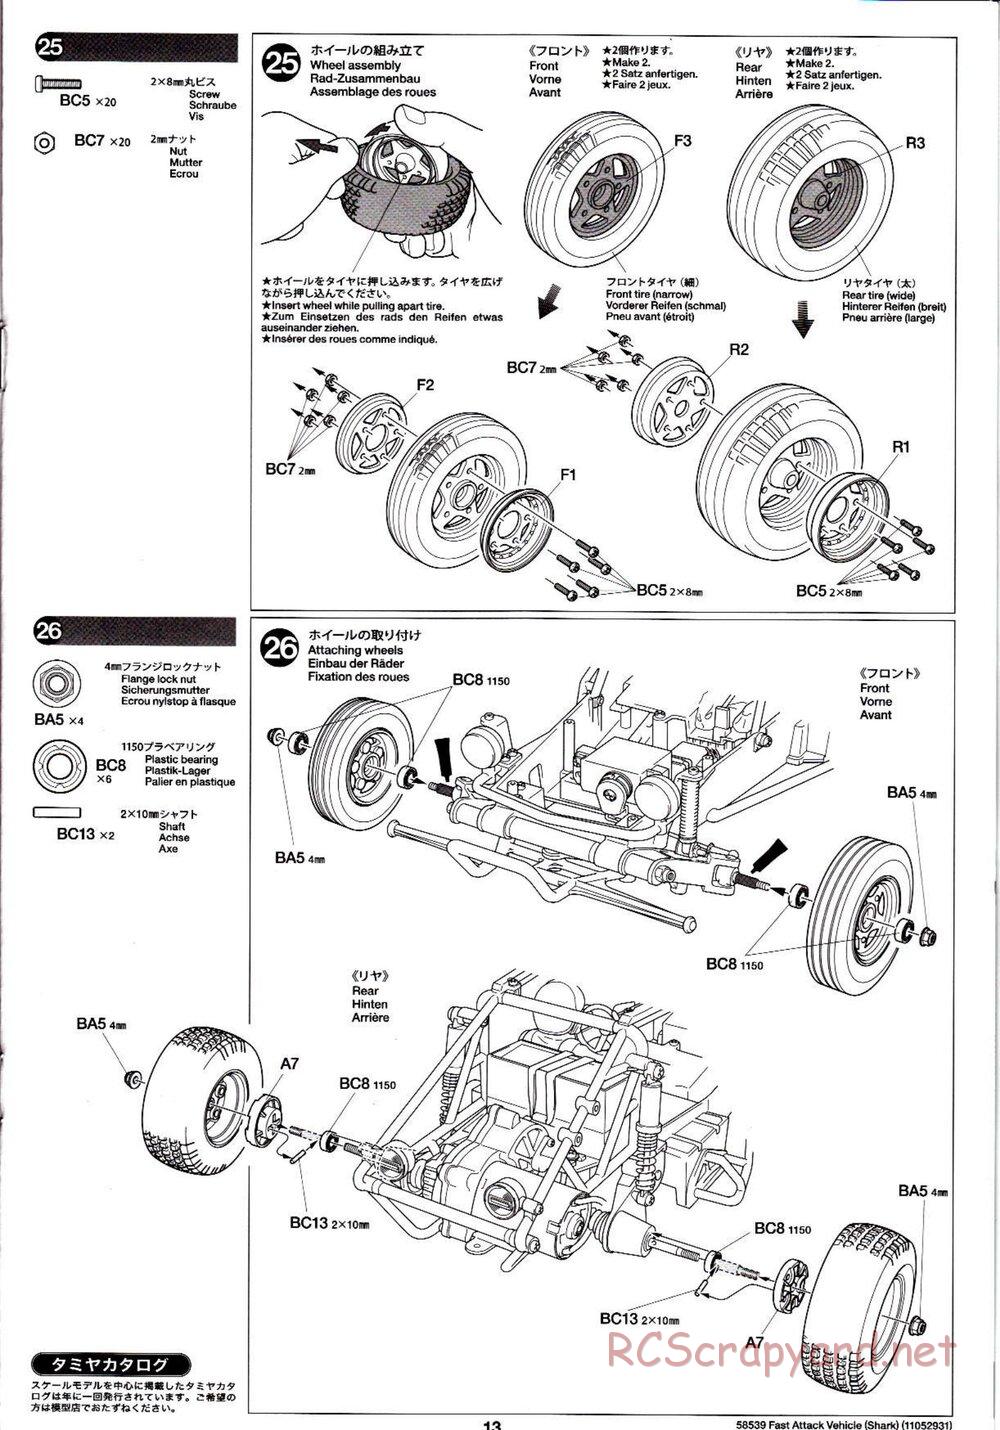 Tamiya - Fast Attack Vehicle w/ Shark Mouth - FAV Chassis - Manual - Page 13